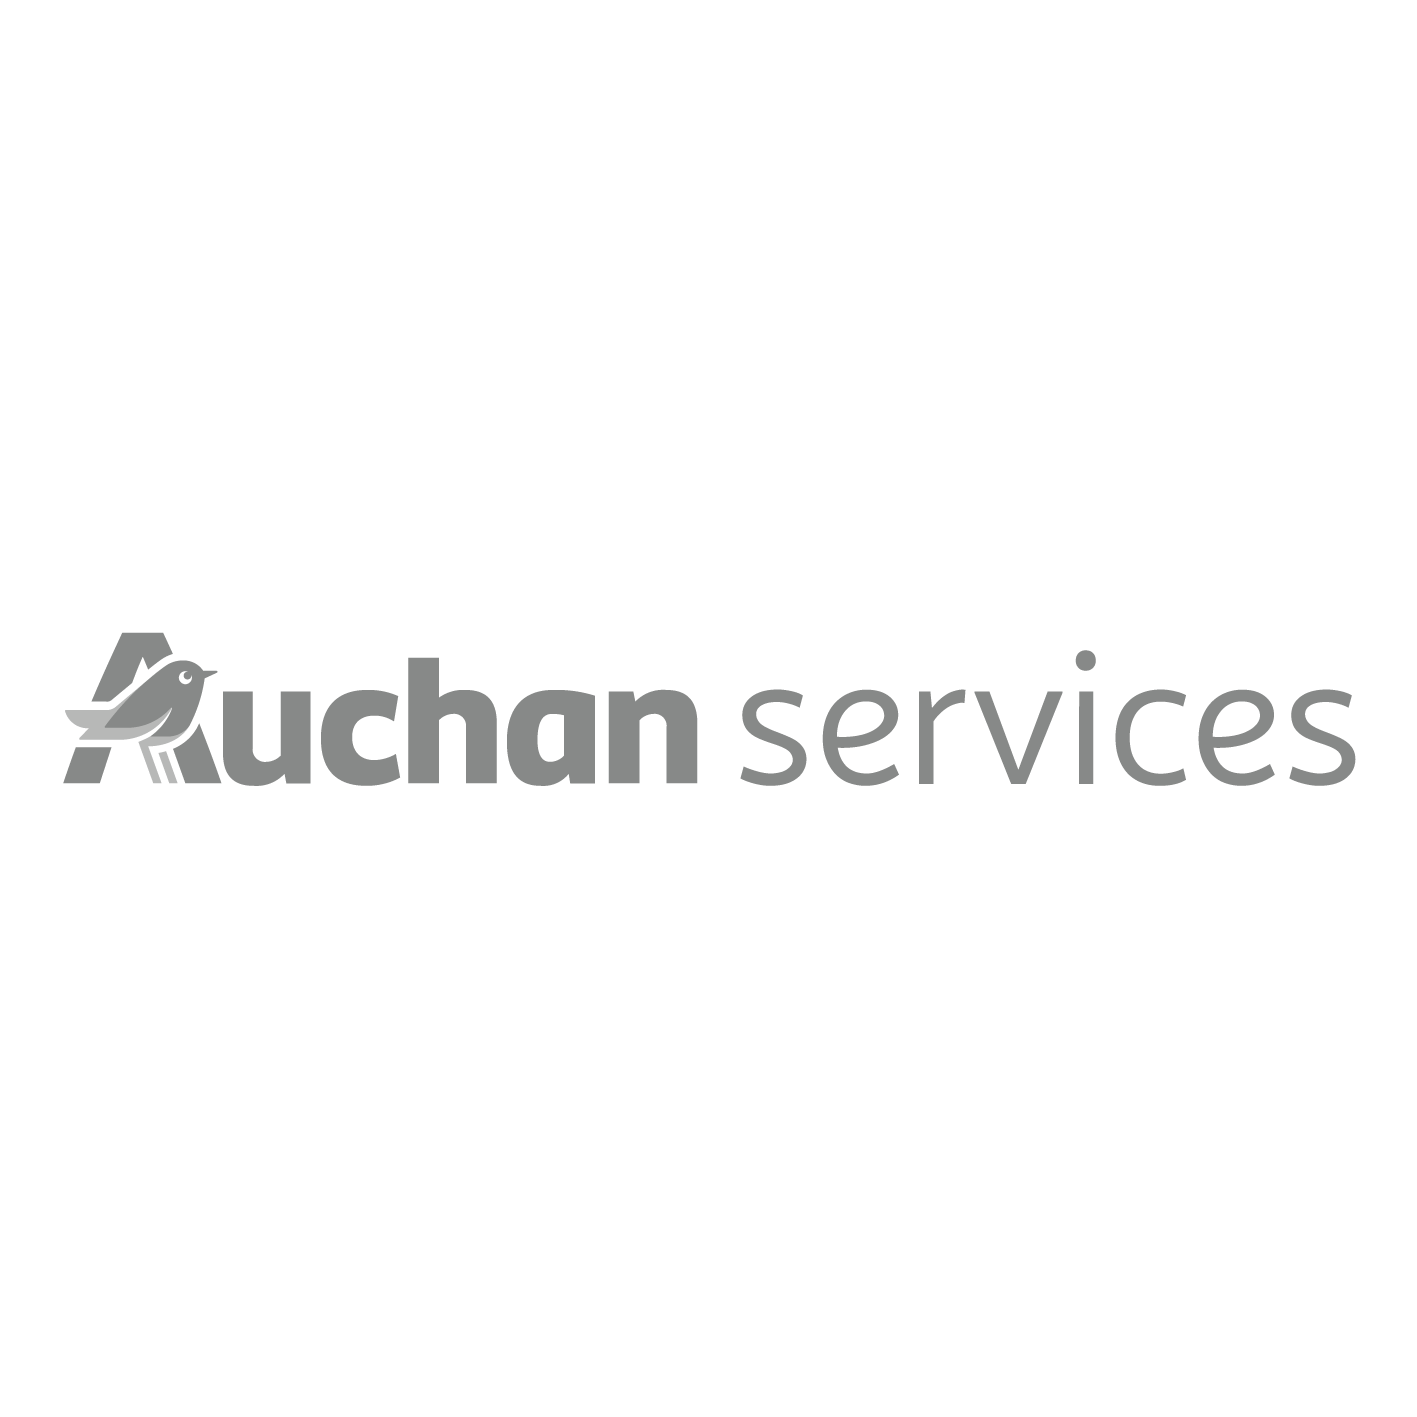 Auchan services